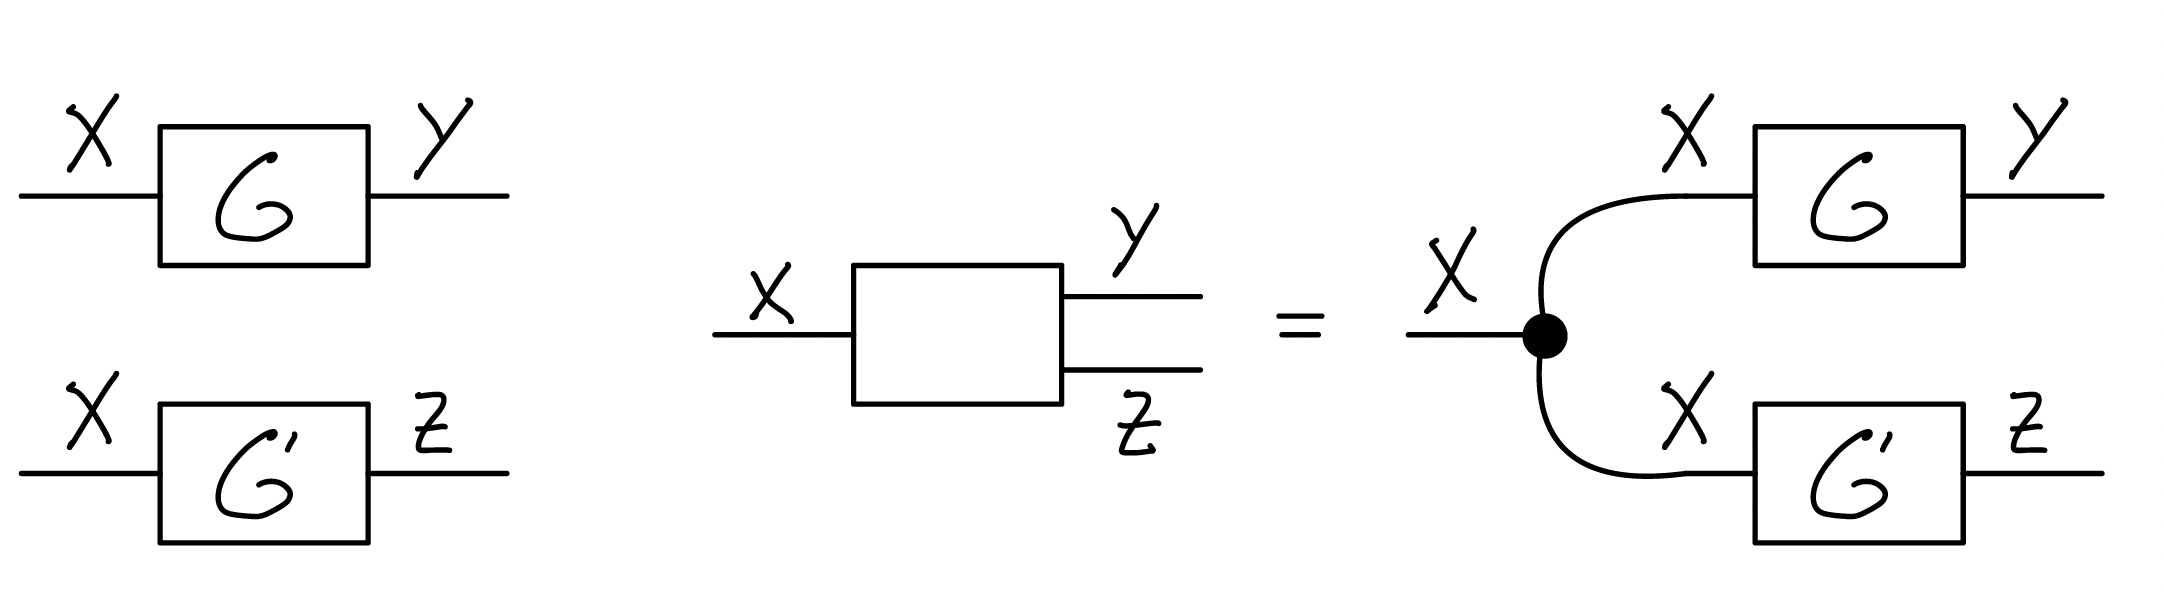 Example of using the Frobenius monoid